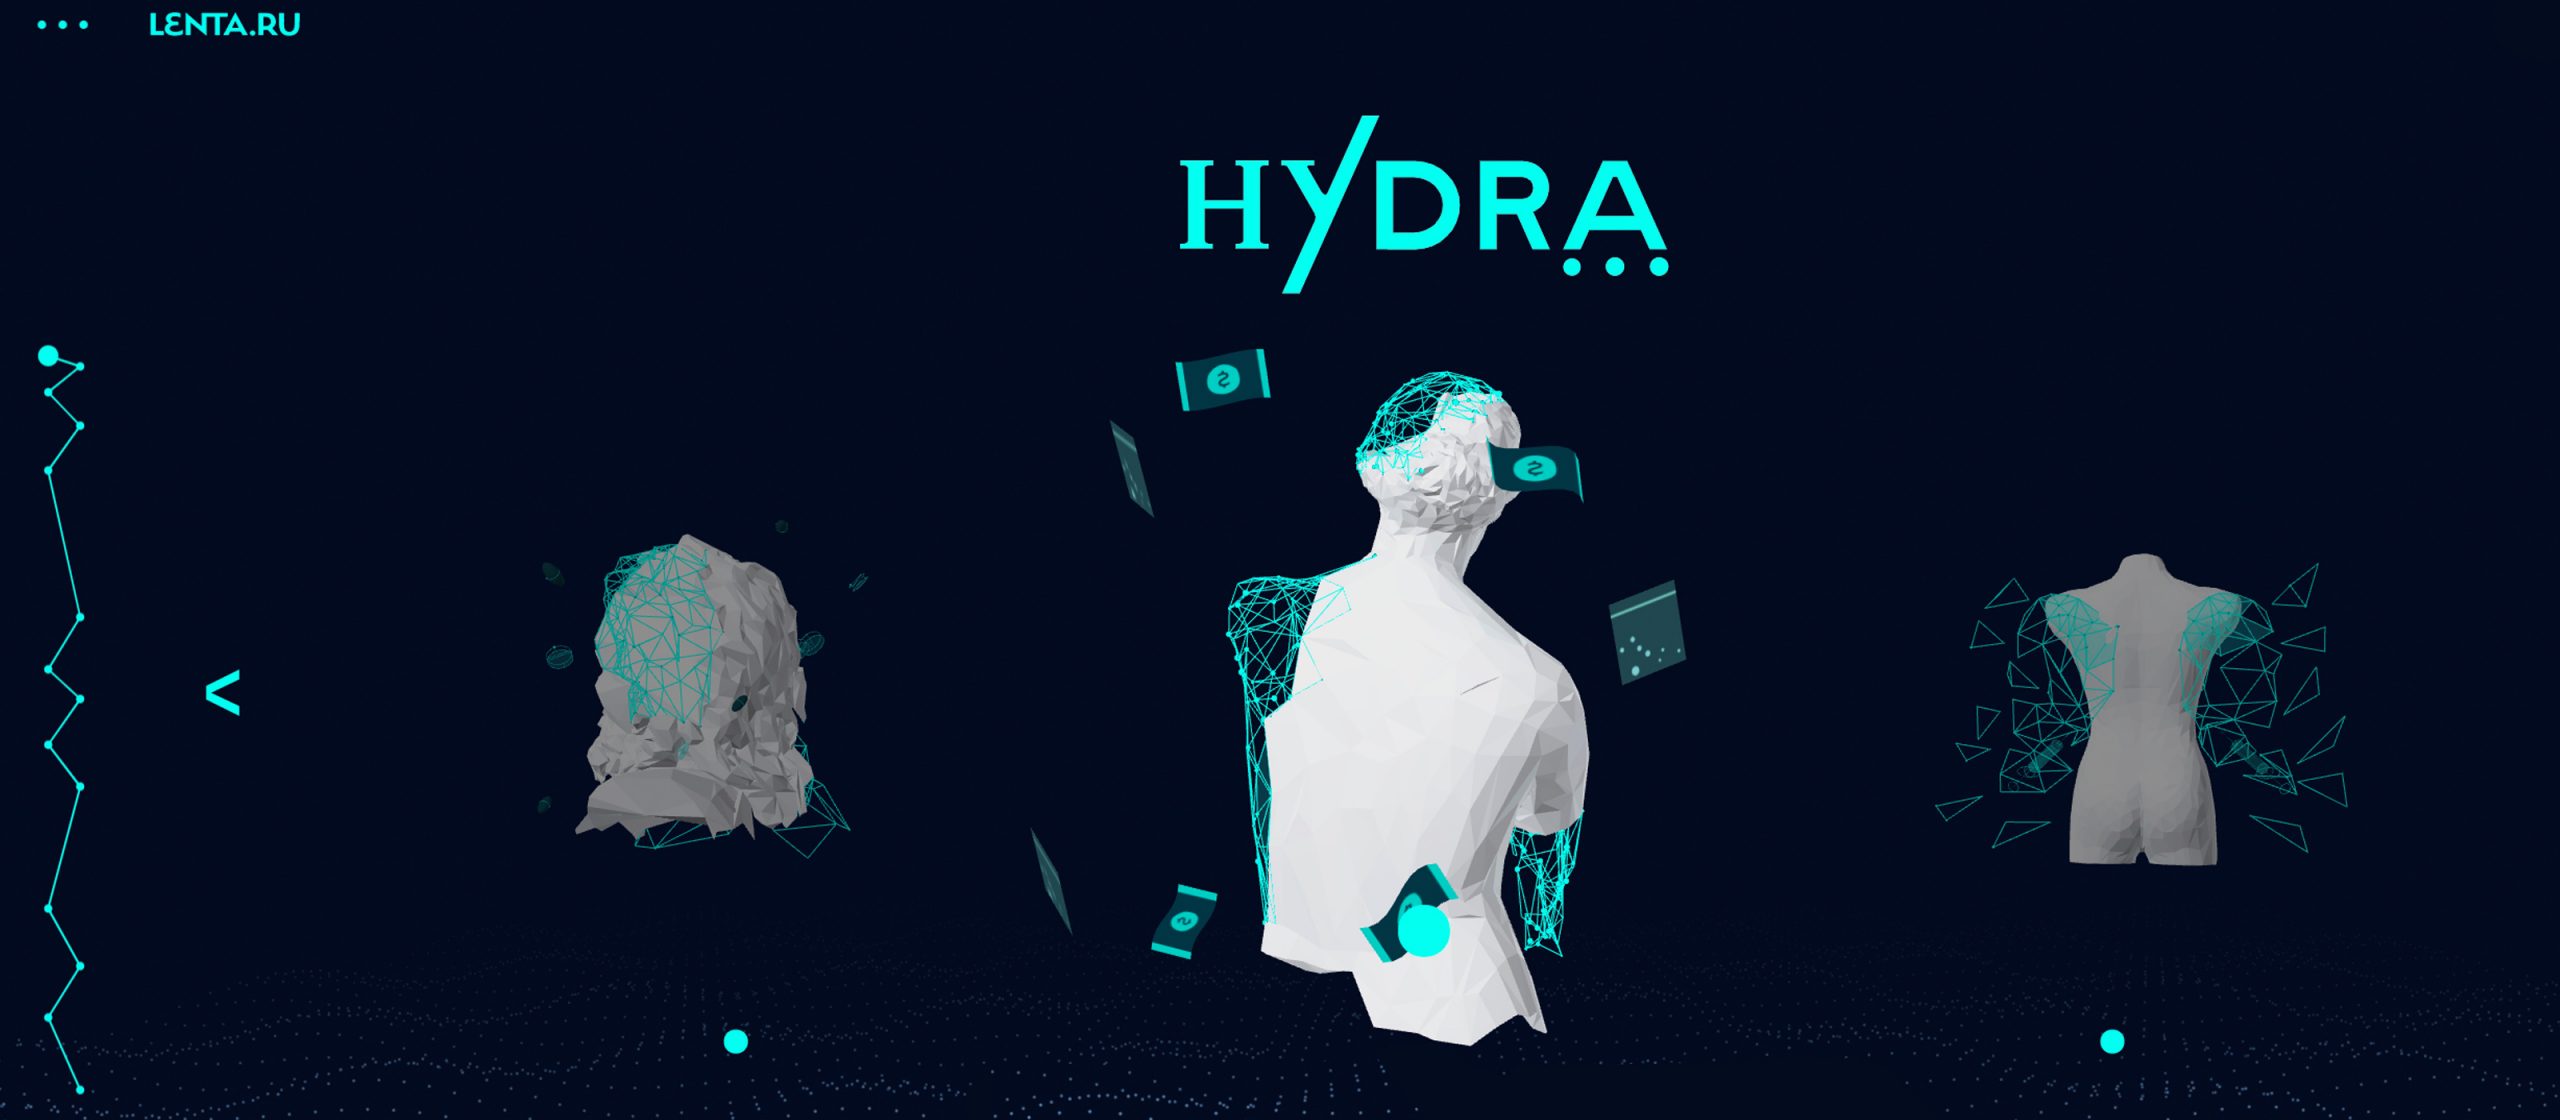 Russia's Hydra Darknet Marketplace Plans $146M Token Sale